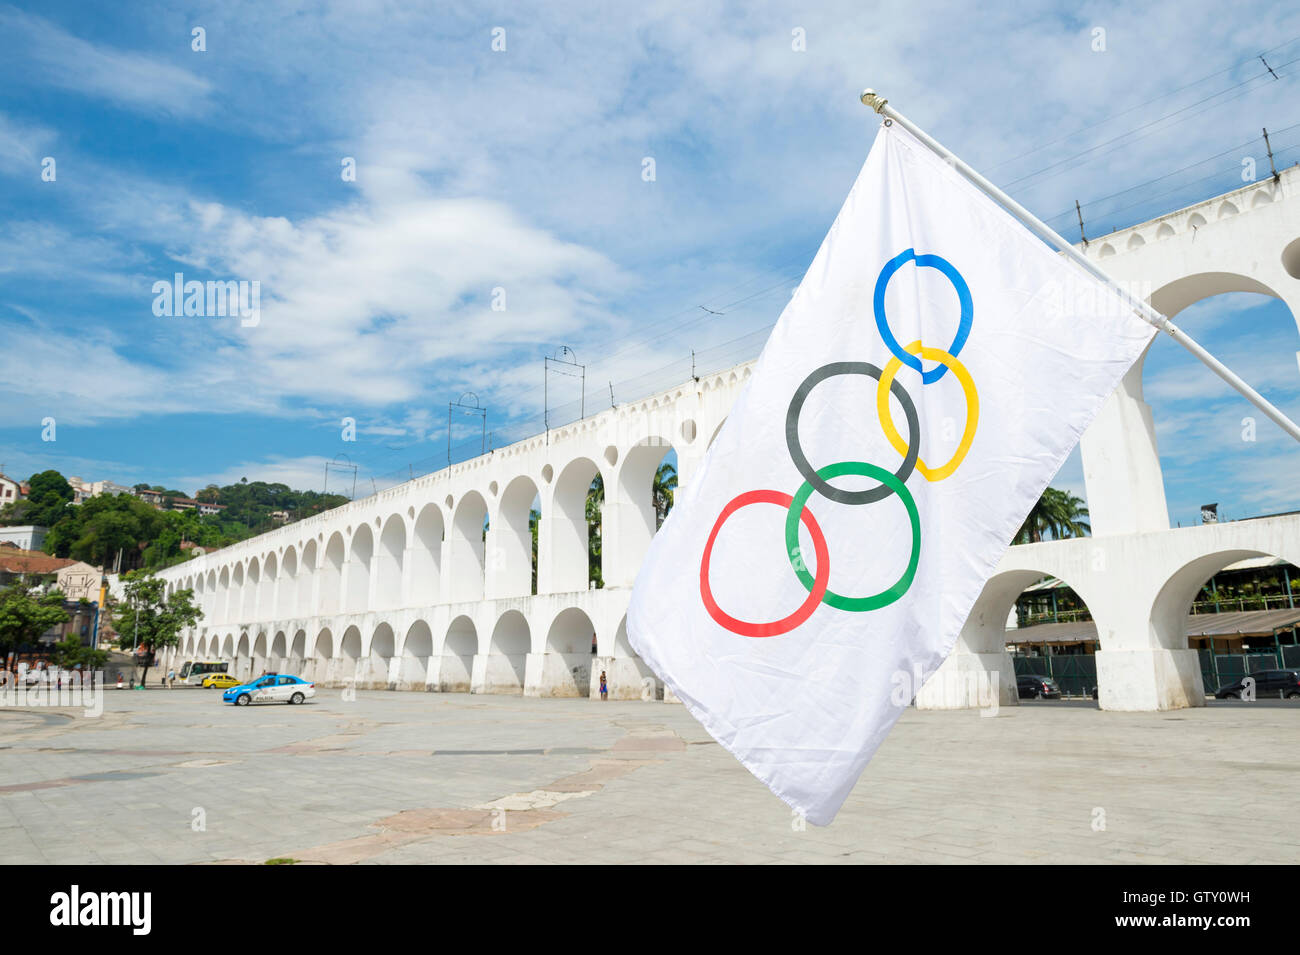 RIO DE JANEIRO - MARCH 6, 2016: An Olympic flag flies in the plaza above the famous Arcos da Lapa Arches landmark. Stock Photo